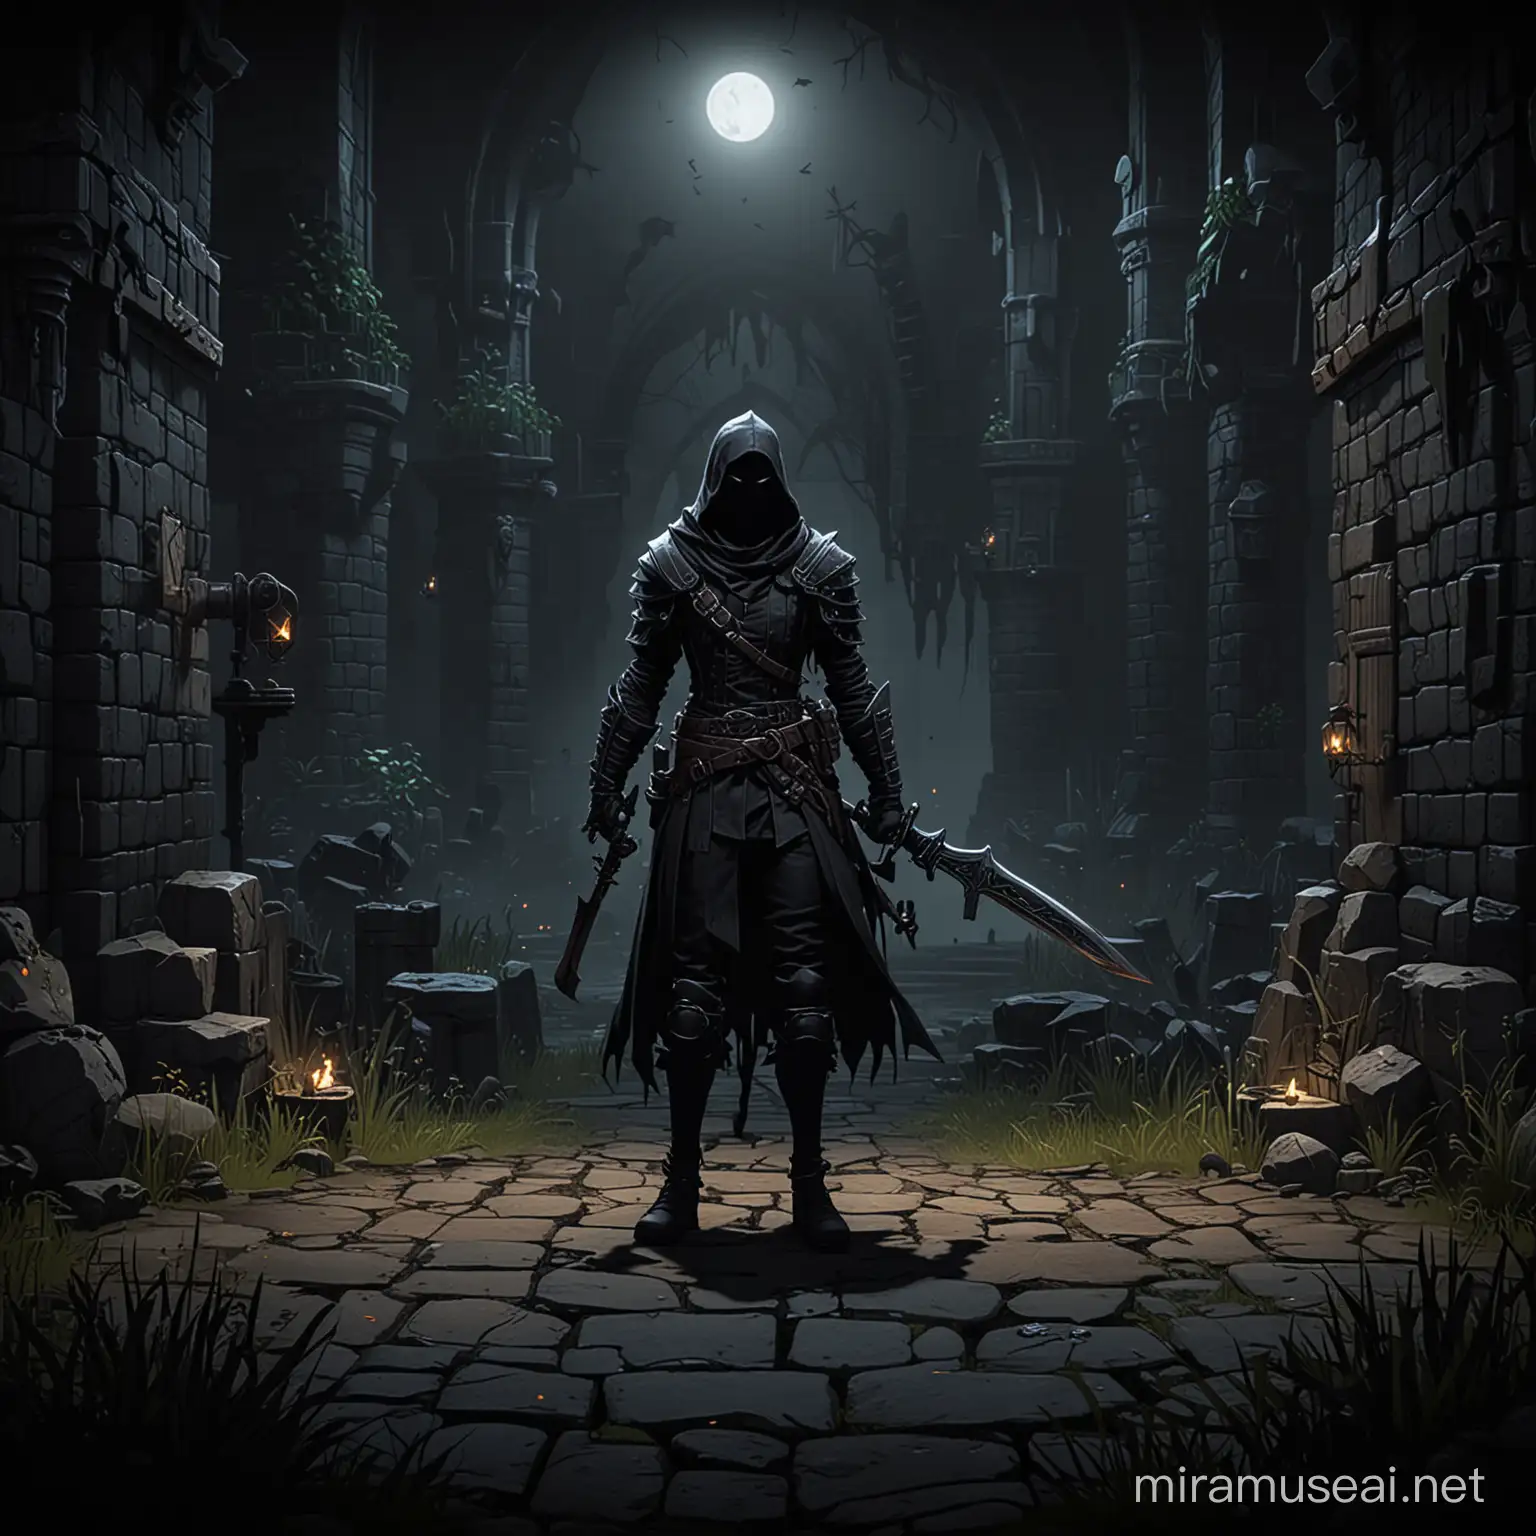 Dark Fantasy Roguelike Adventure Gothic Slasher in 2D Game Design